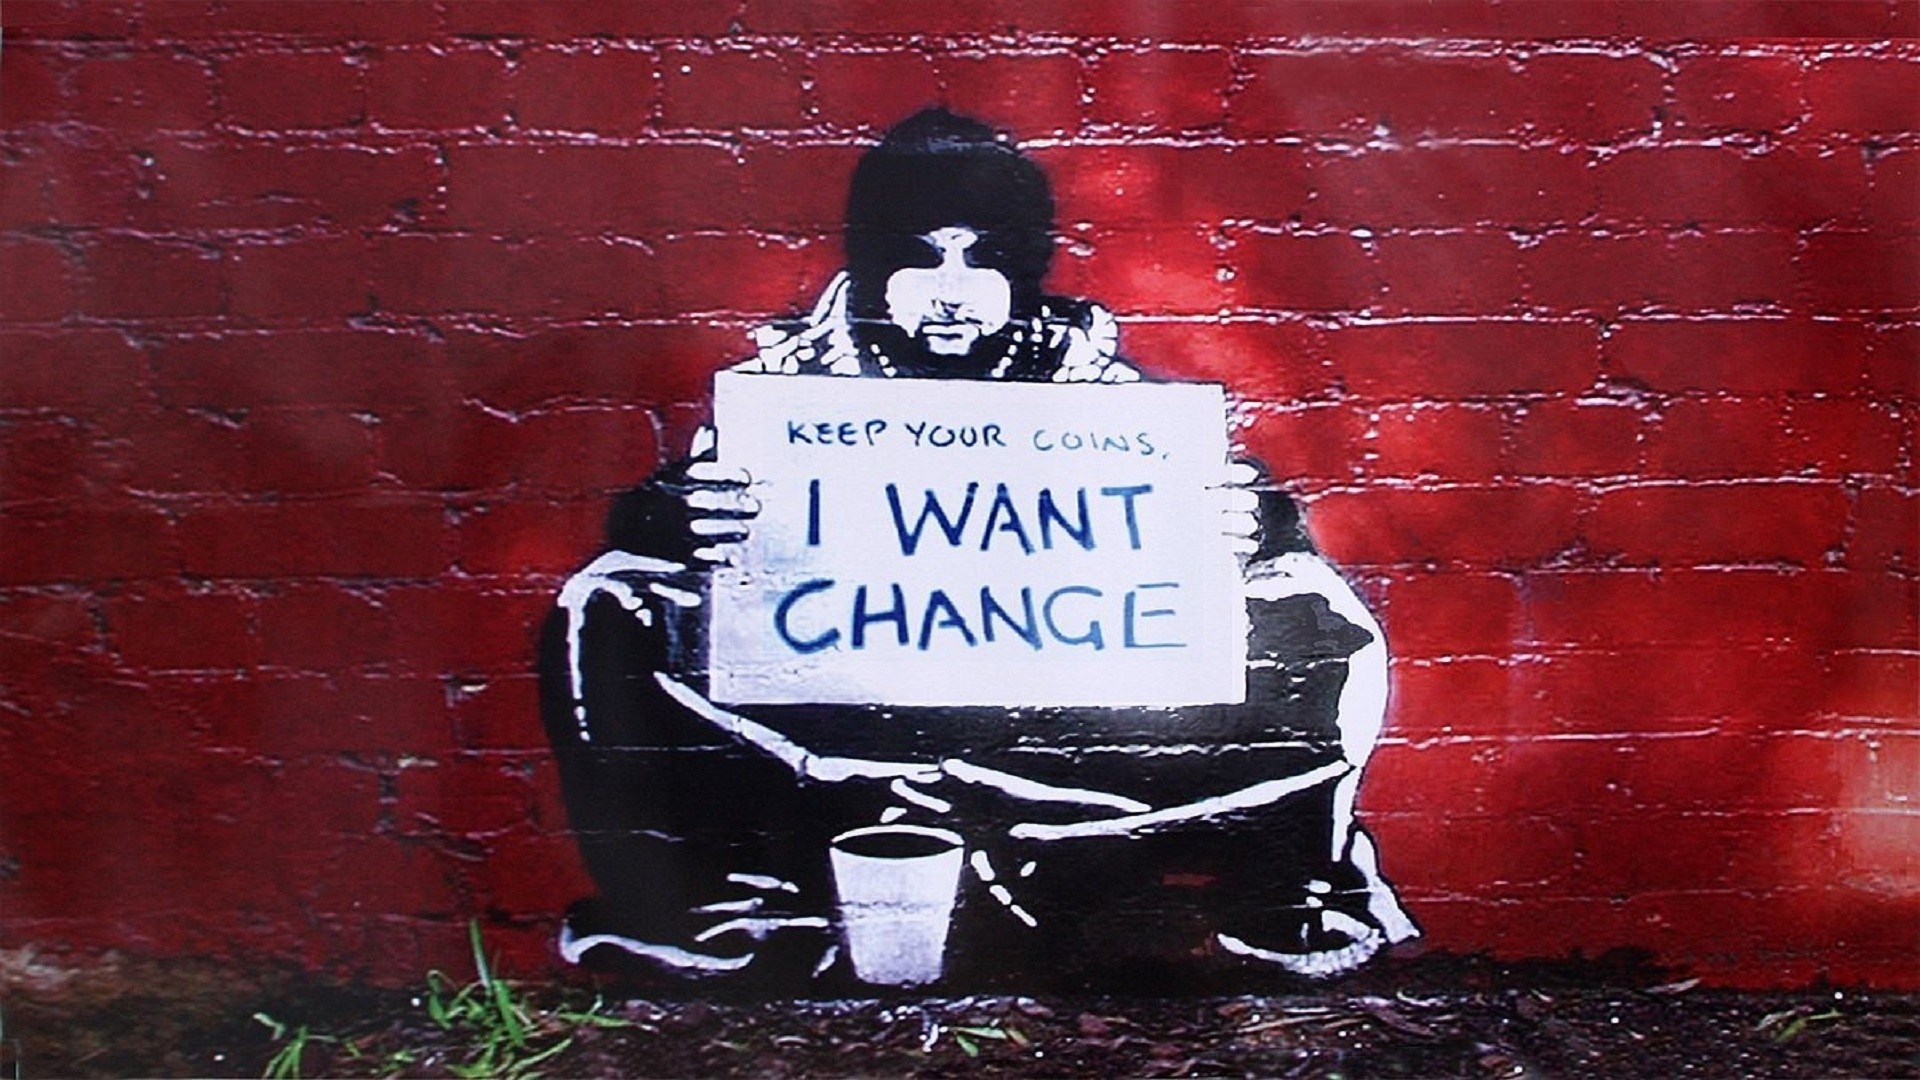 1920x1080 Banksy, Red, Red Wall, Graffiti, Street Art, I Want Change,